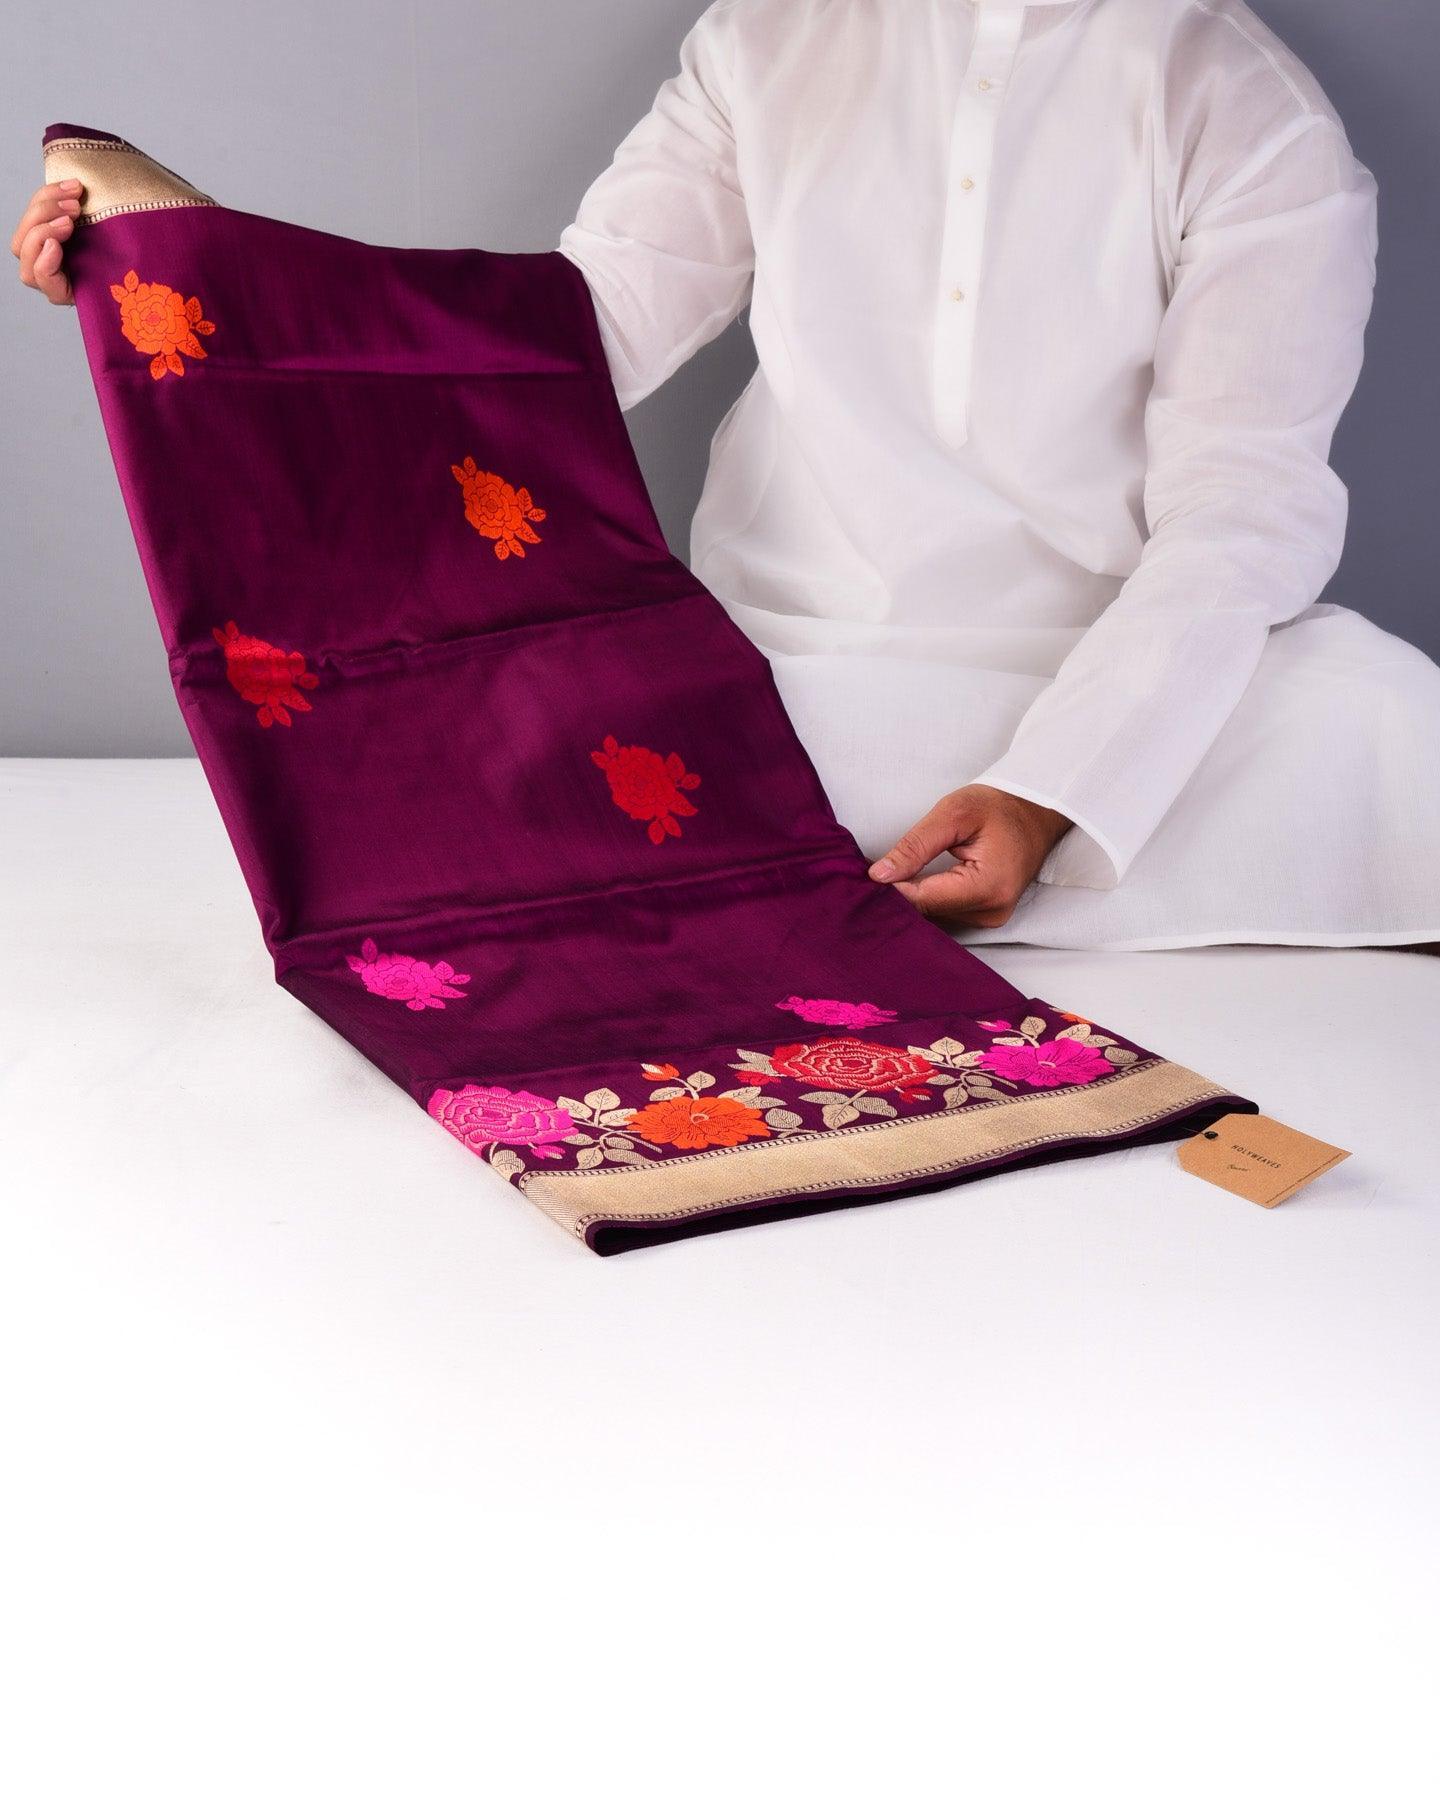 Purple Banarasi Resham Gulab Buti Kadhuan Brocade Handwoven Katan Silk Saree with Meenekari Border - By HolyWeaves, Benares